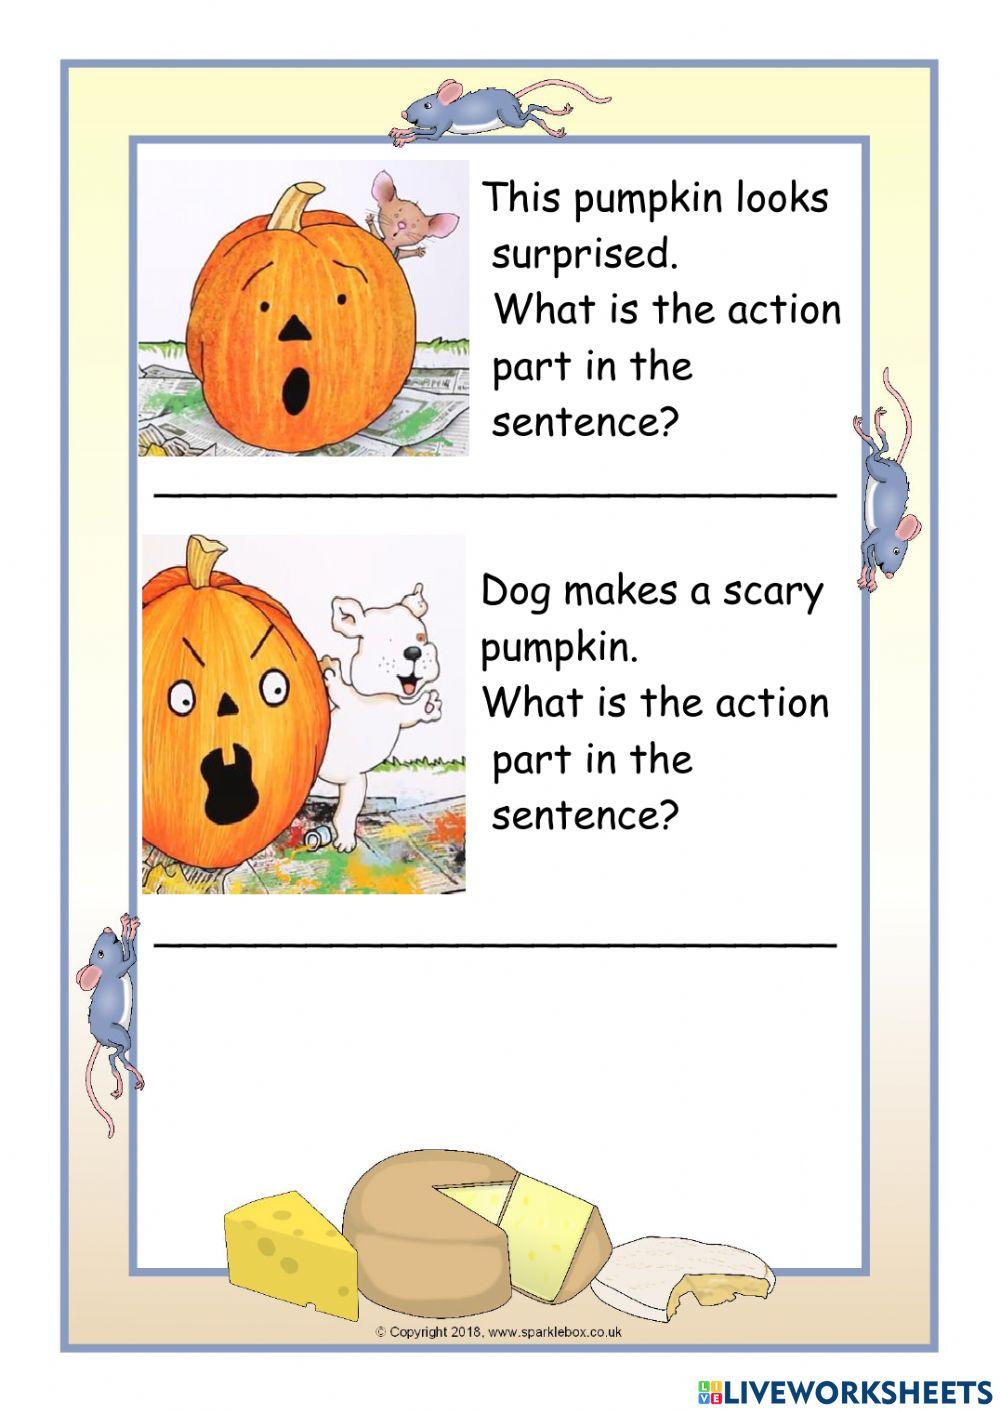 I'ts Pumpkin Day, Mouse!